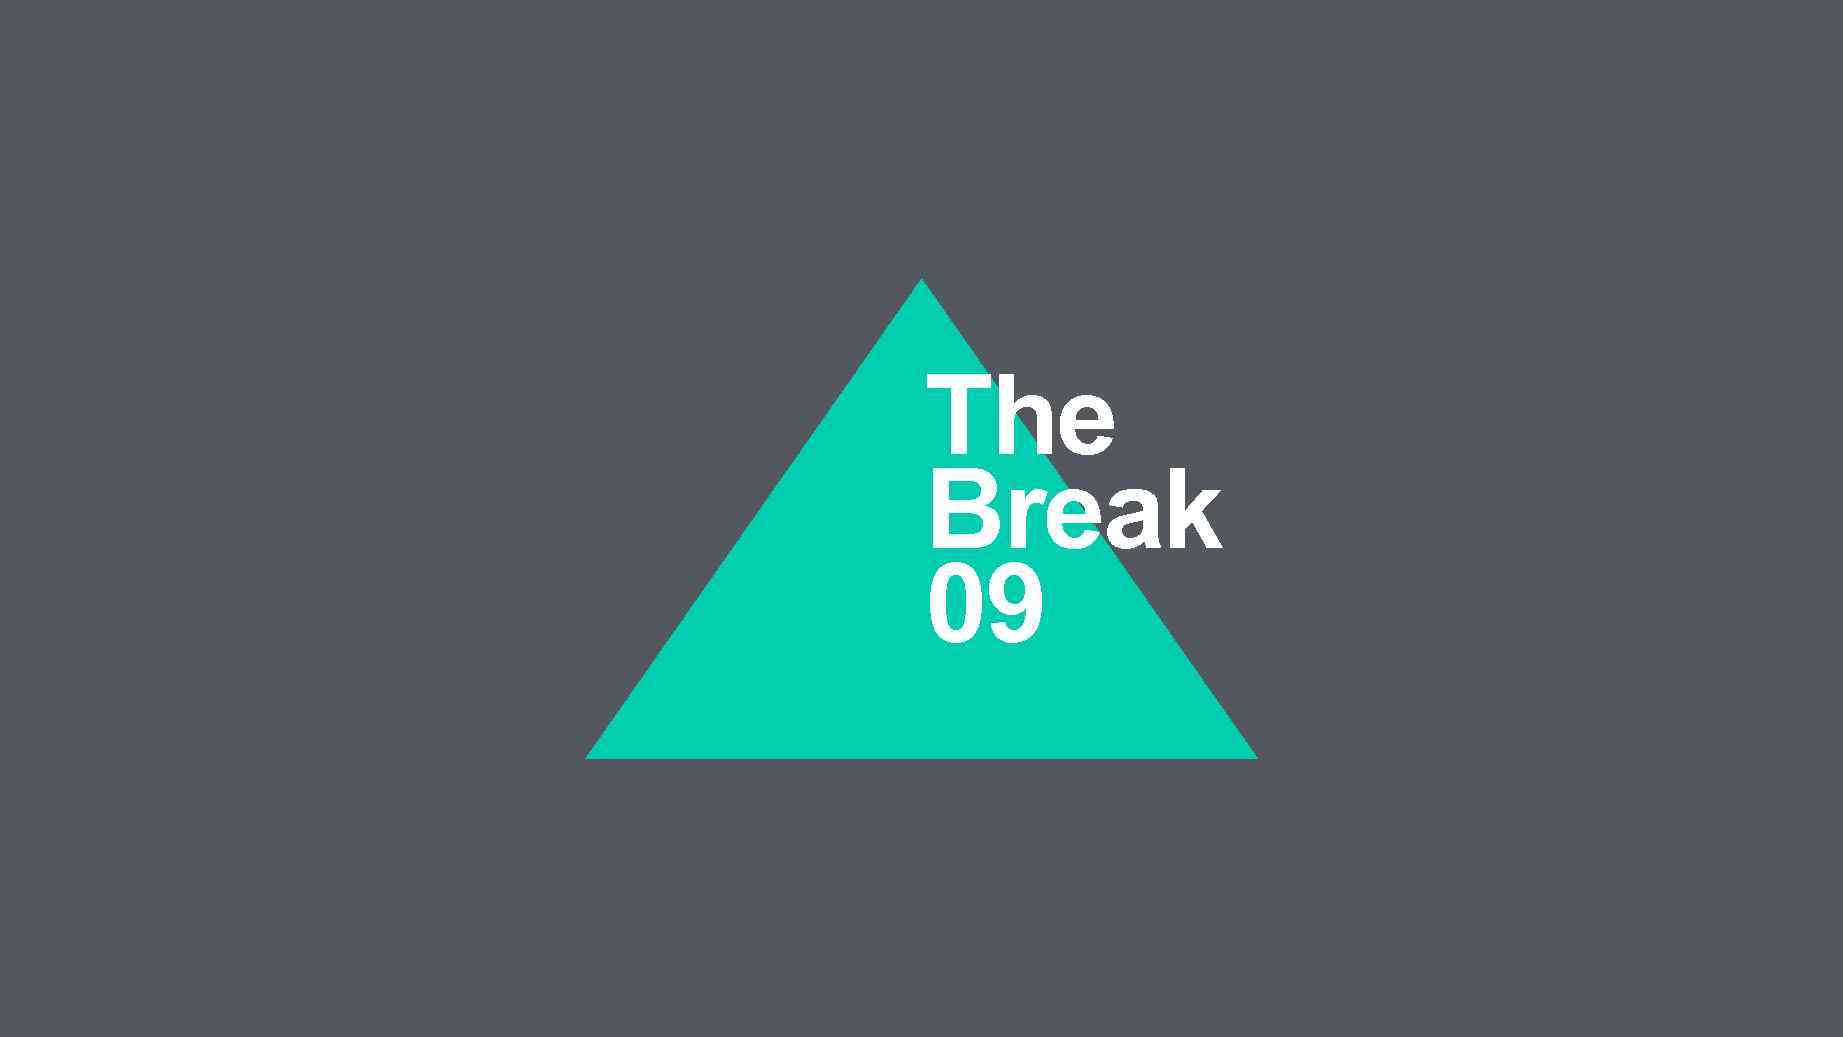 The Break 09 